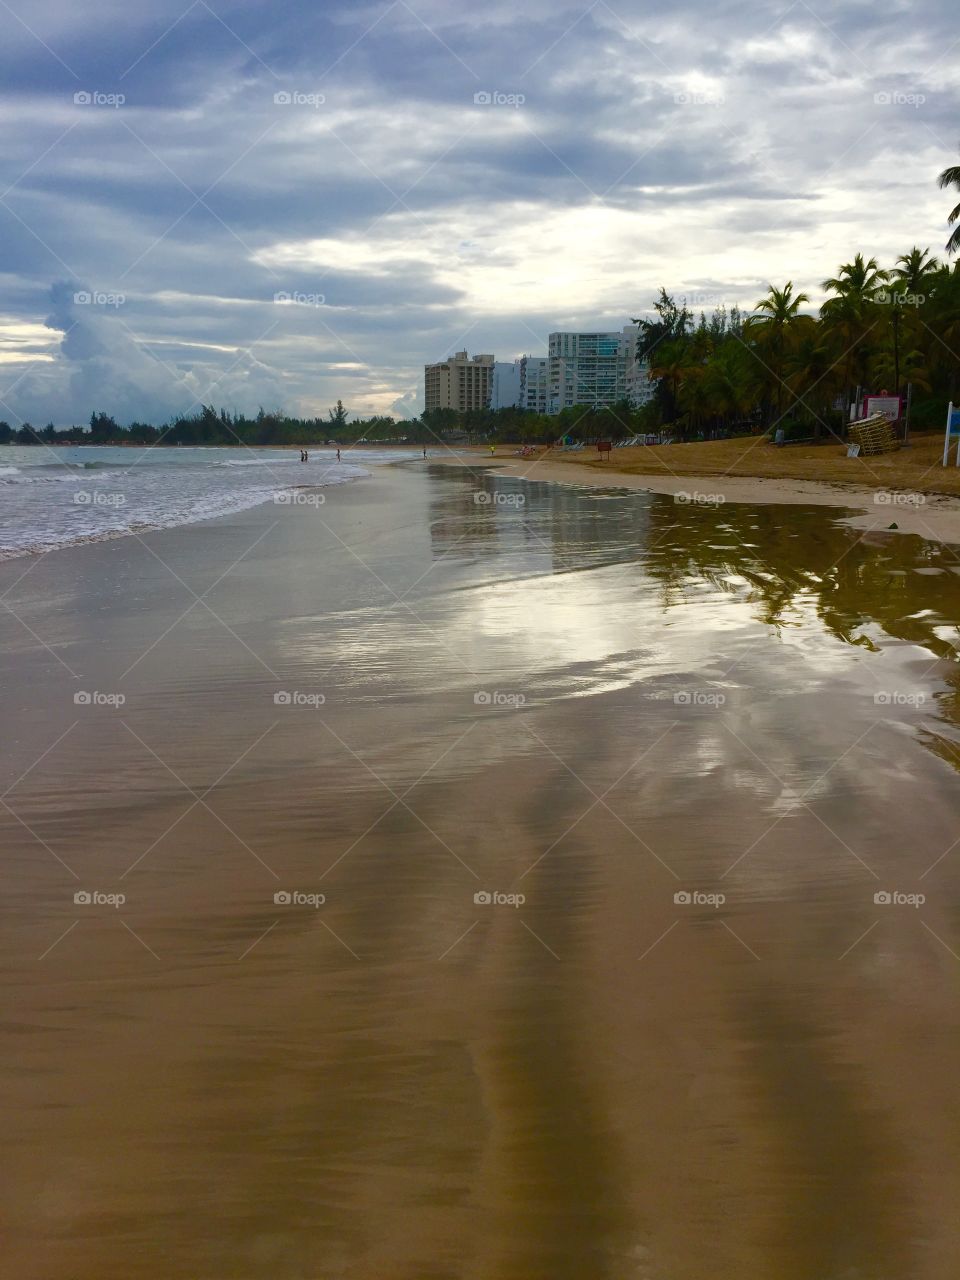 Ocean beach brown sand in Puerto Rico